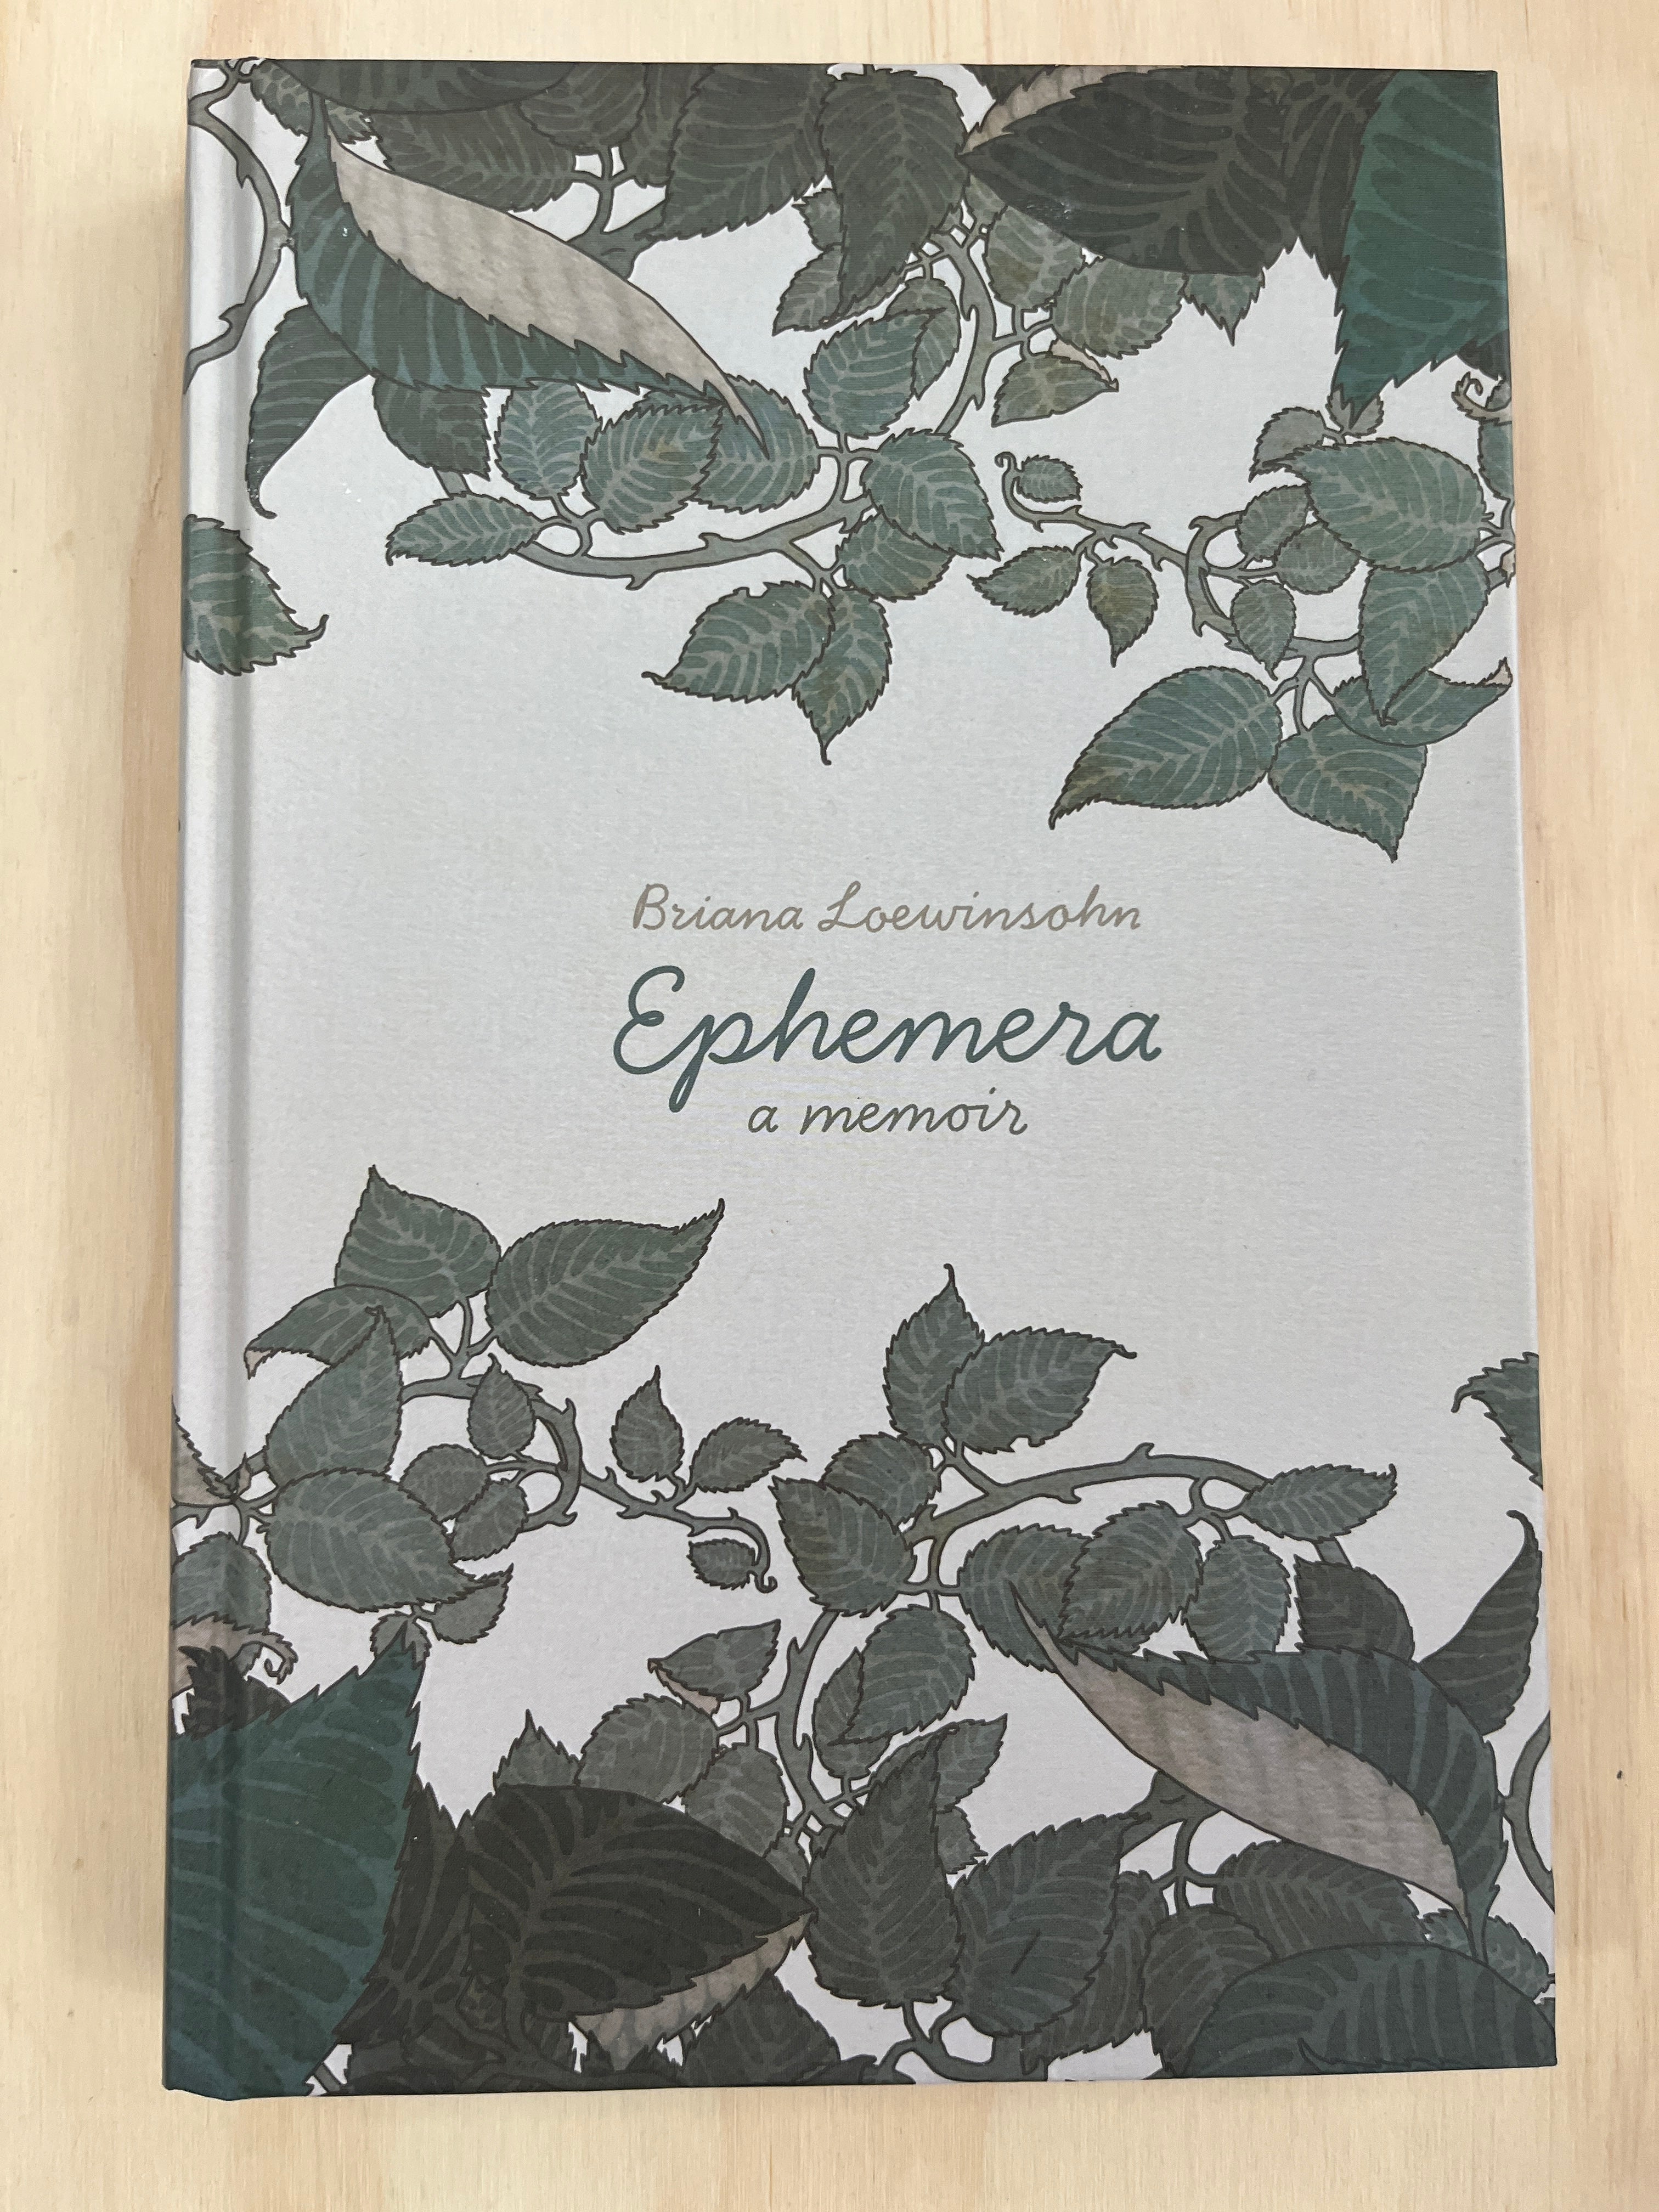 Ephemera: A Memoir